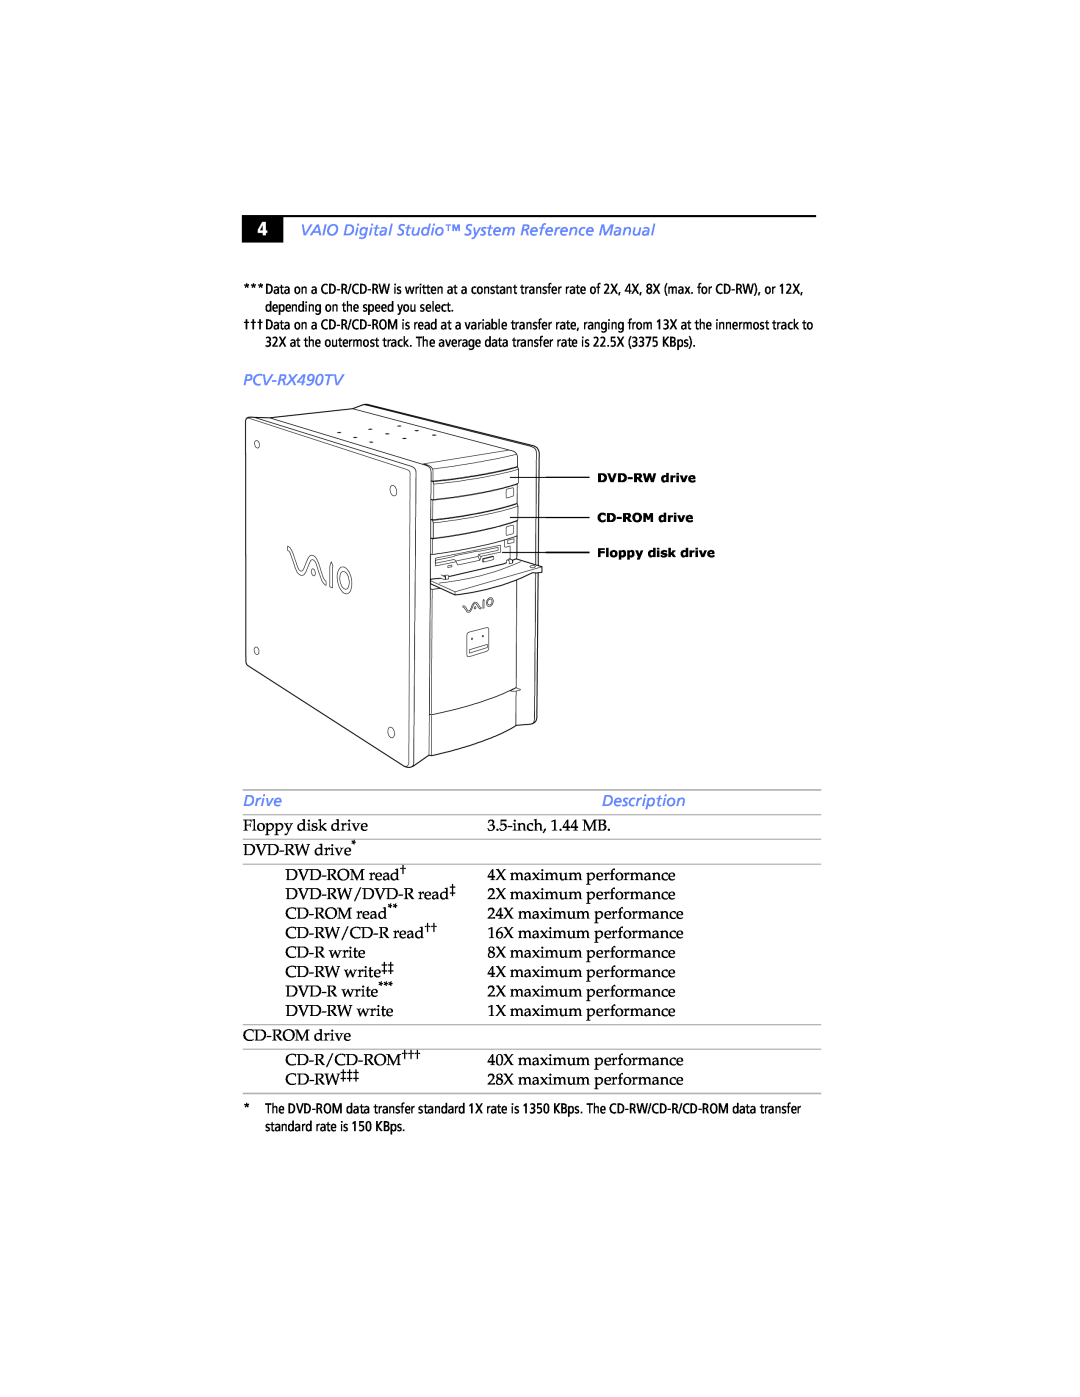 Sony PCV-RX462DS, PCV-RX470DS, PCV-RX480DS VAIO Digital Studio System Reference Manual, PCV-RX490TV, Drive, Description 